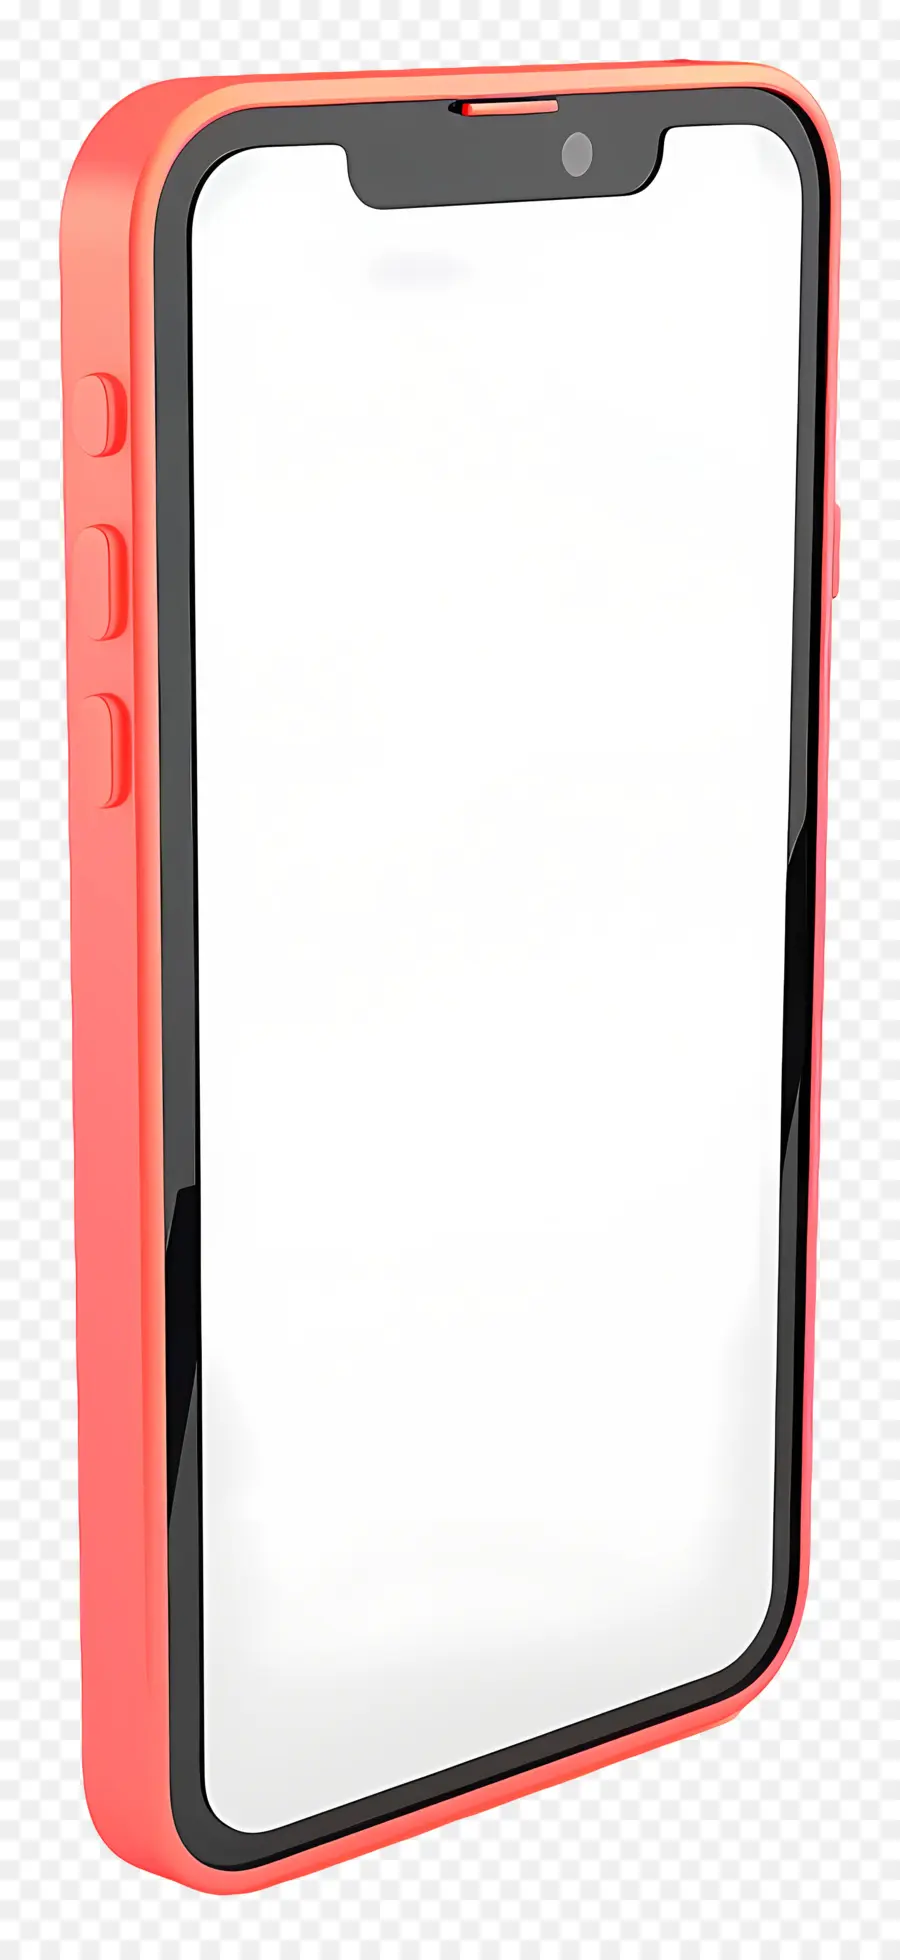 Smartphone Pink iPhone Smartphone Touchscreen Mobile Device - IPhone rosa con schermo, nessun pulsante